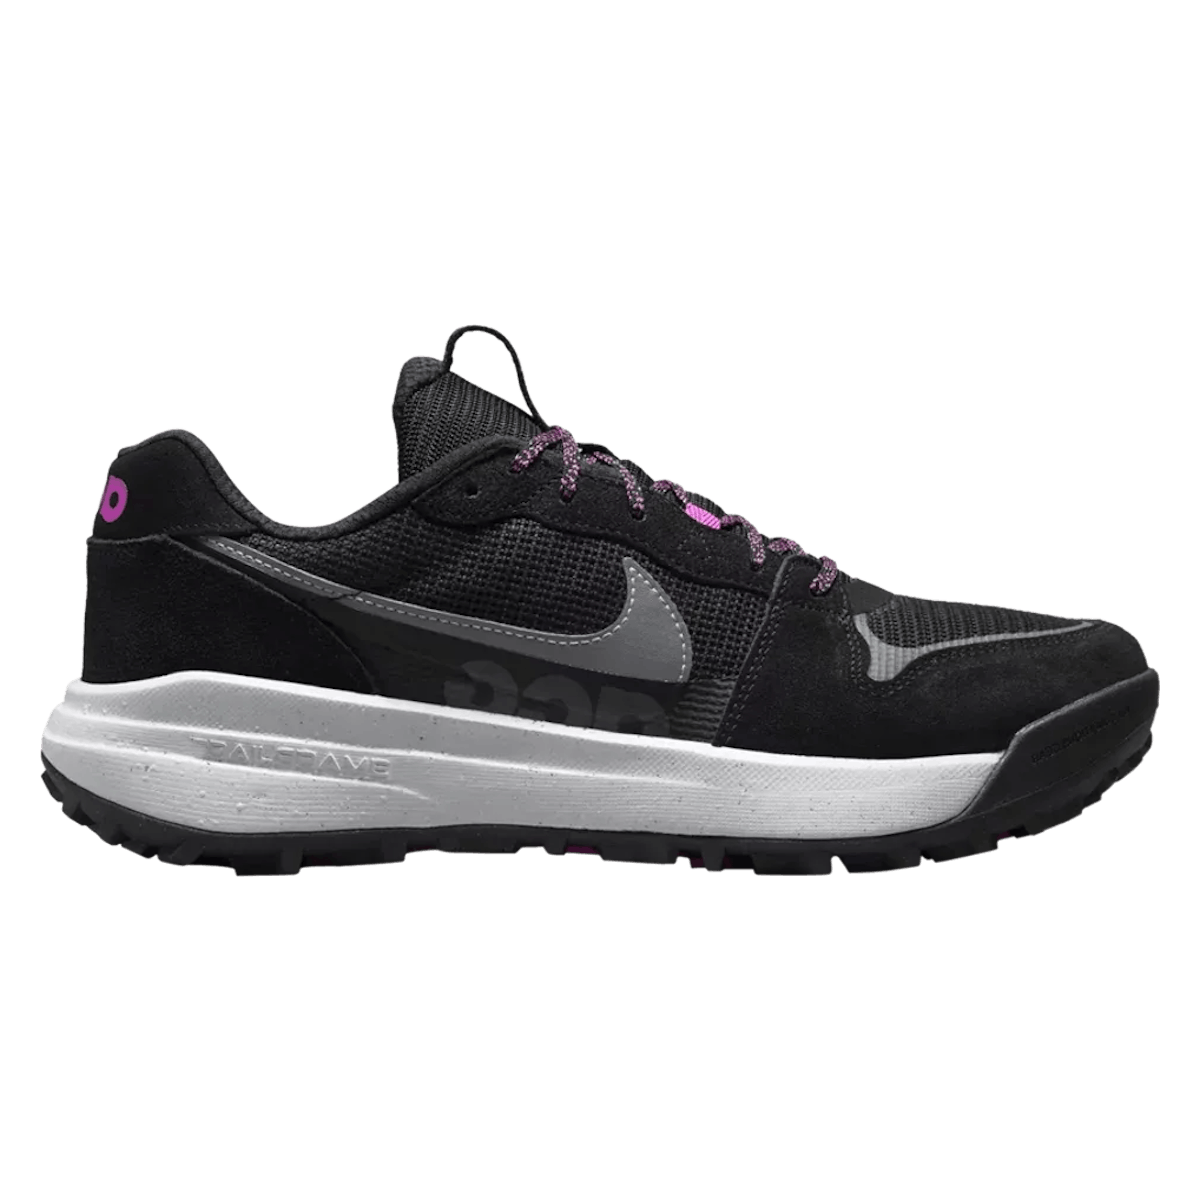 Nike ACG Lowcate "Black and Cool Grey"